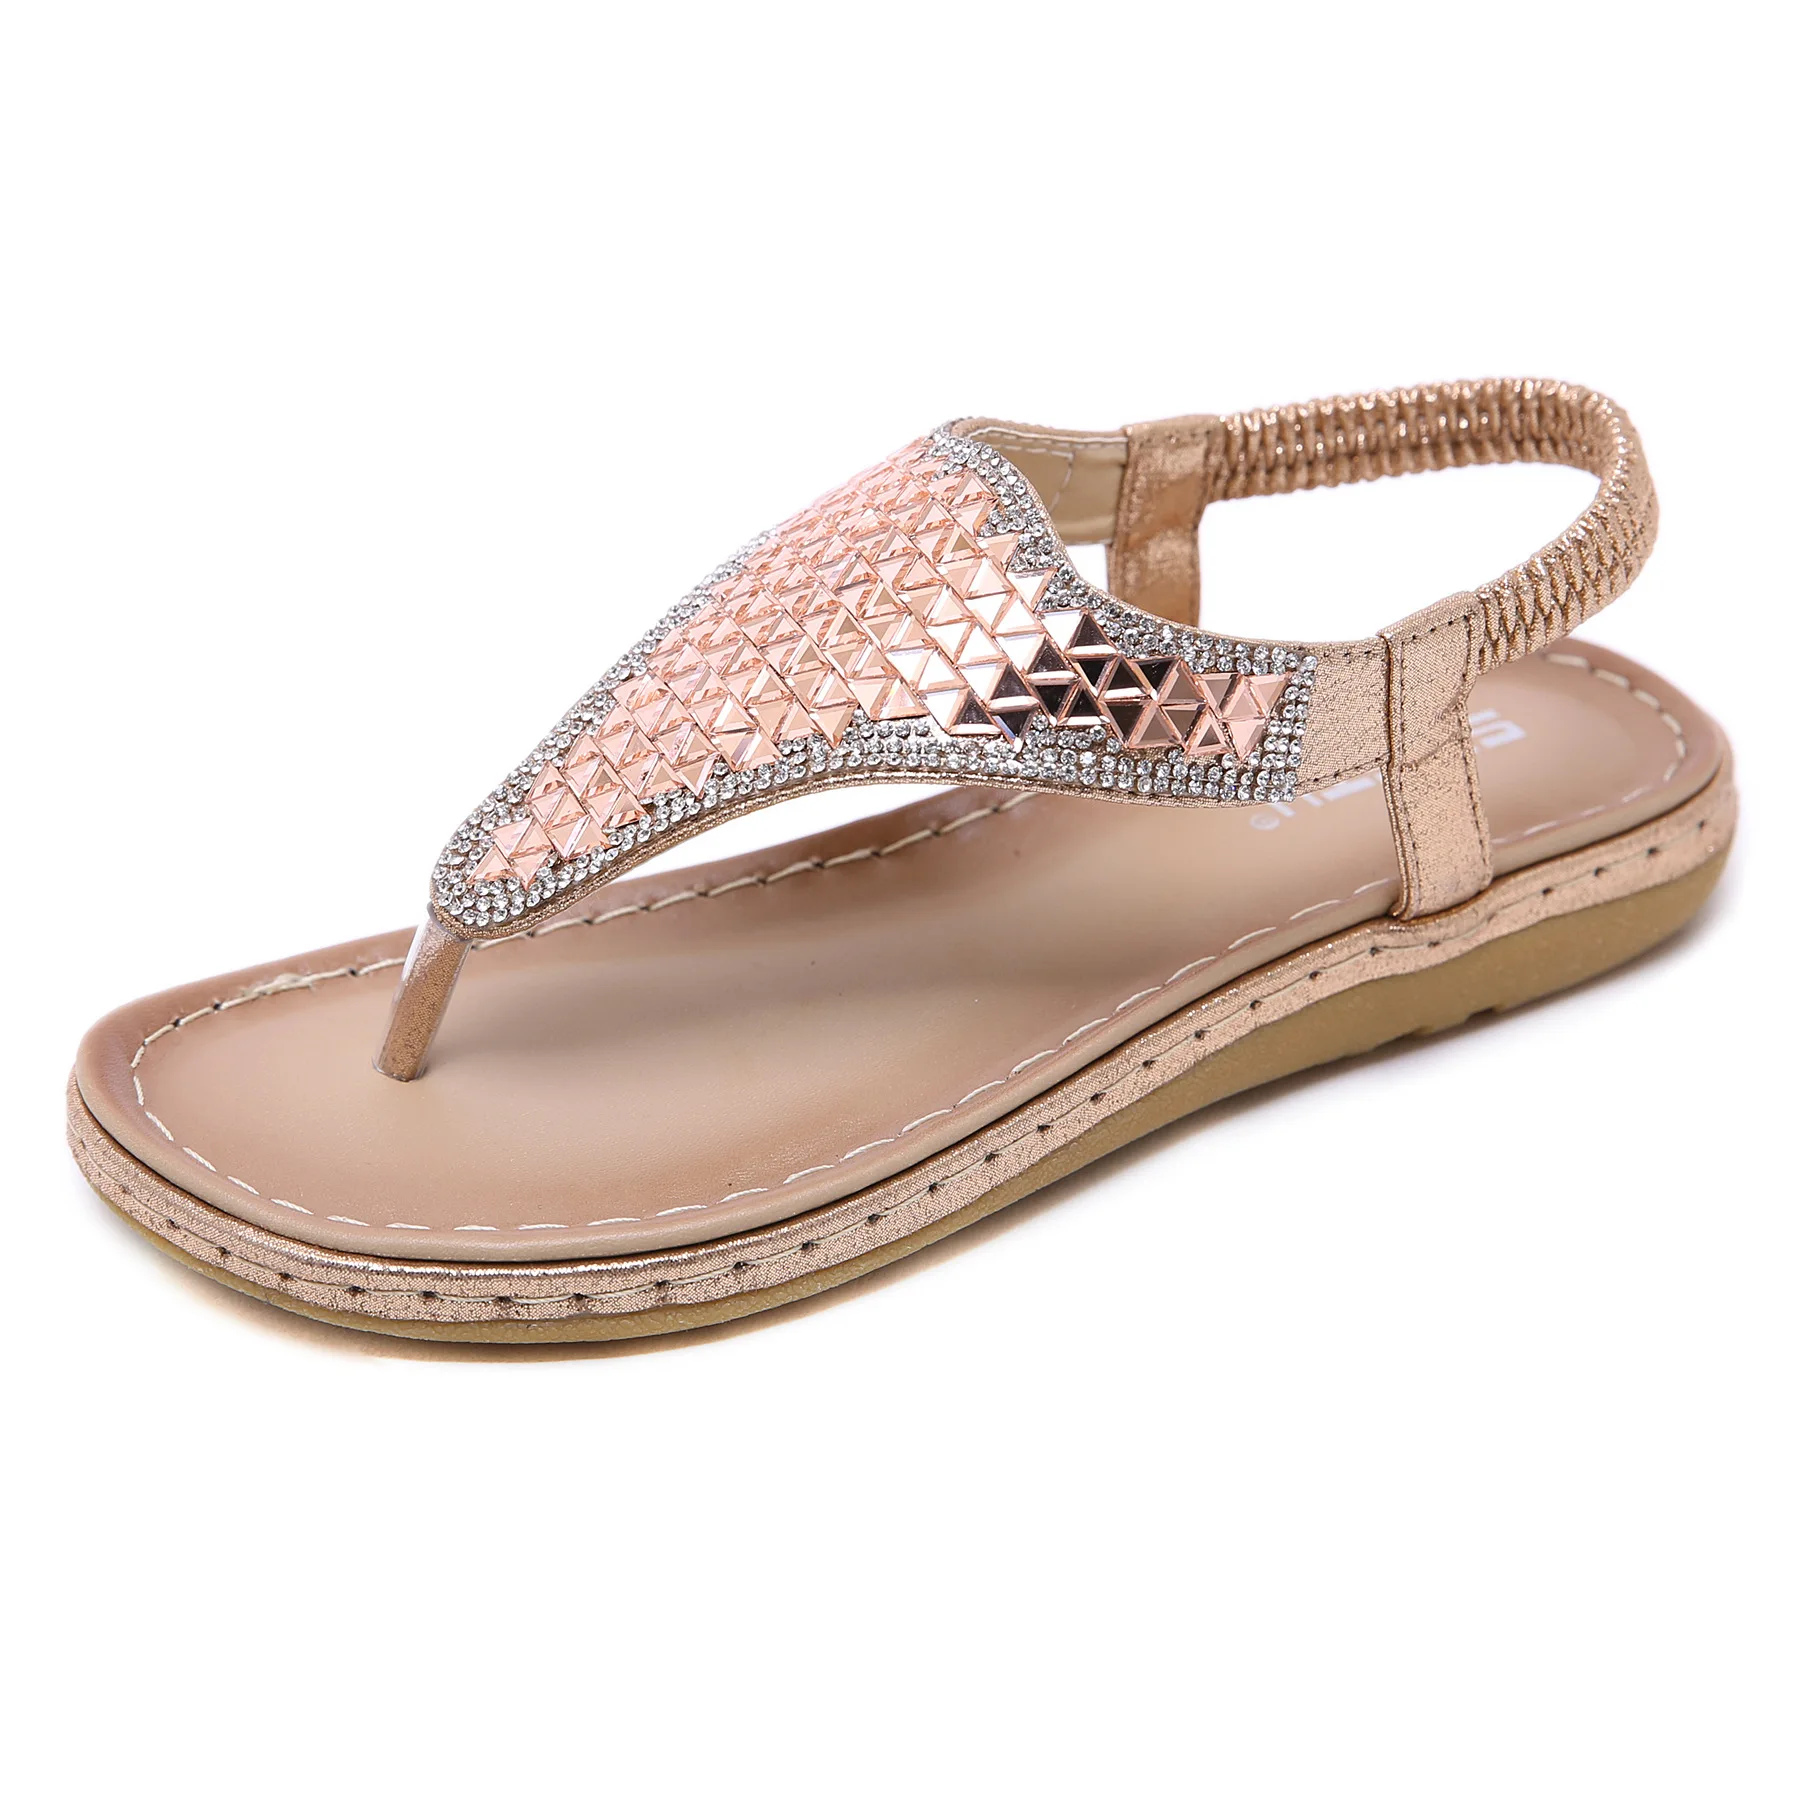 Thong Sandals for Women Beach,Bohemia Floral Flat Sandals T-Strap Summer Beach Glitter Beaded Elastic Flip-Flop Thong Shoes 